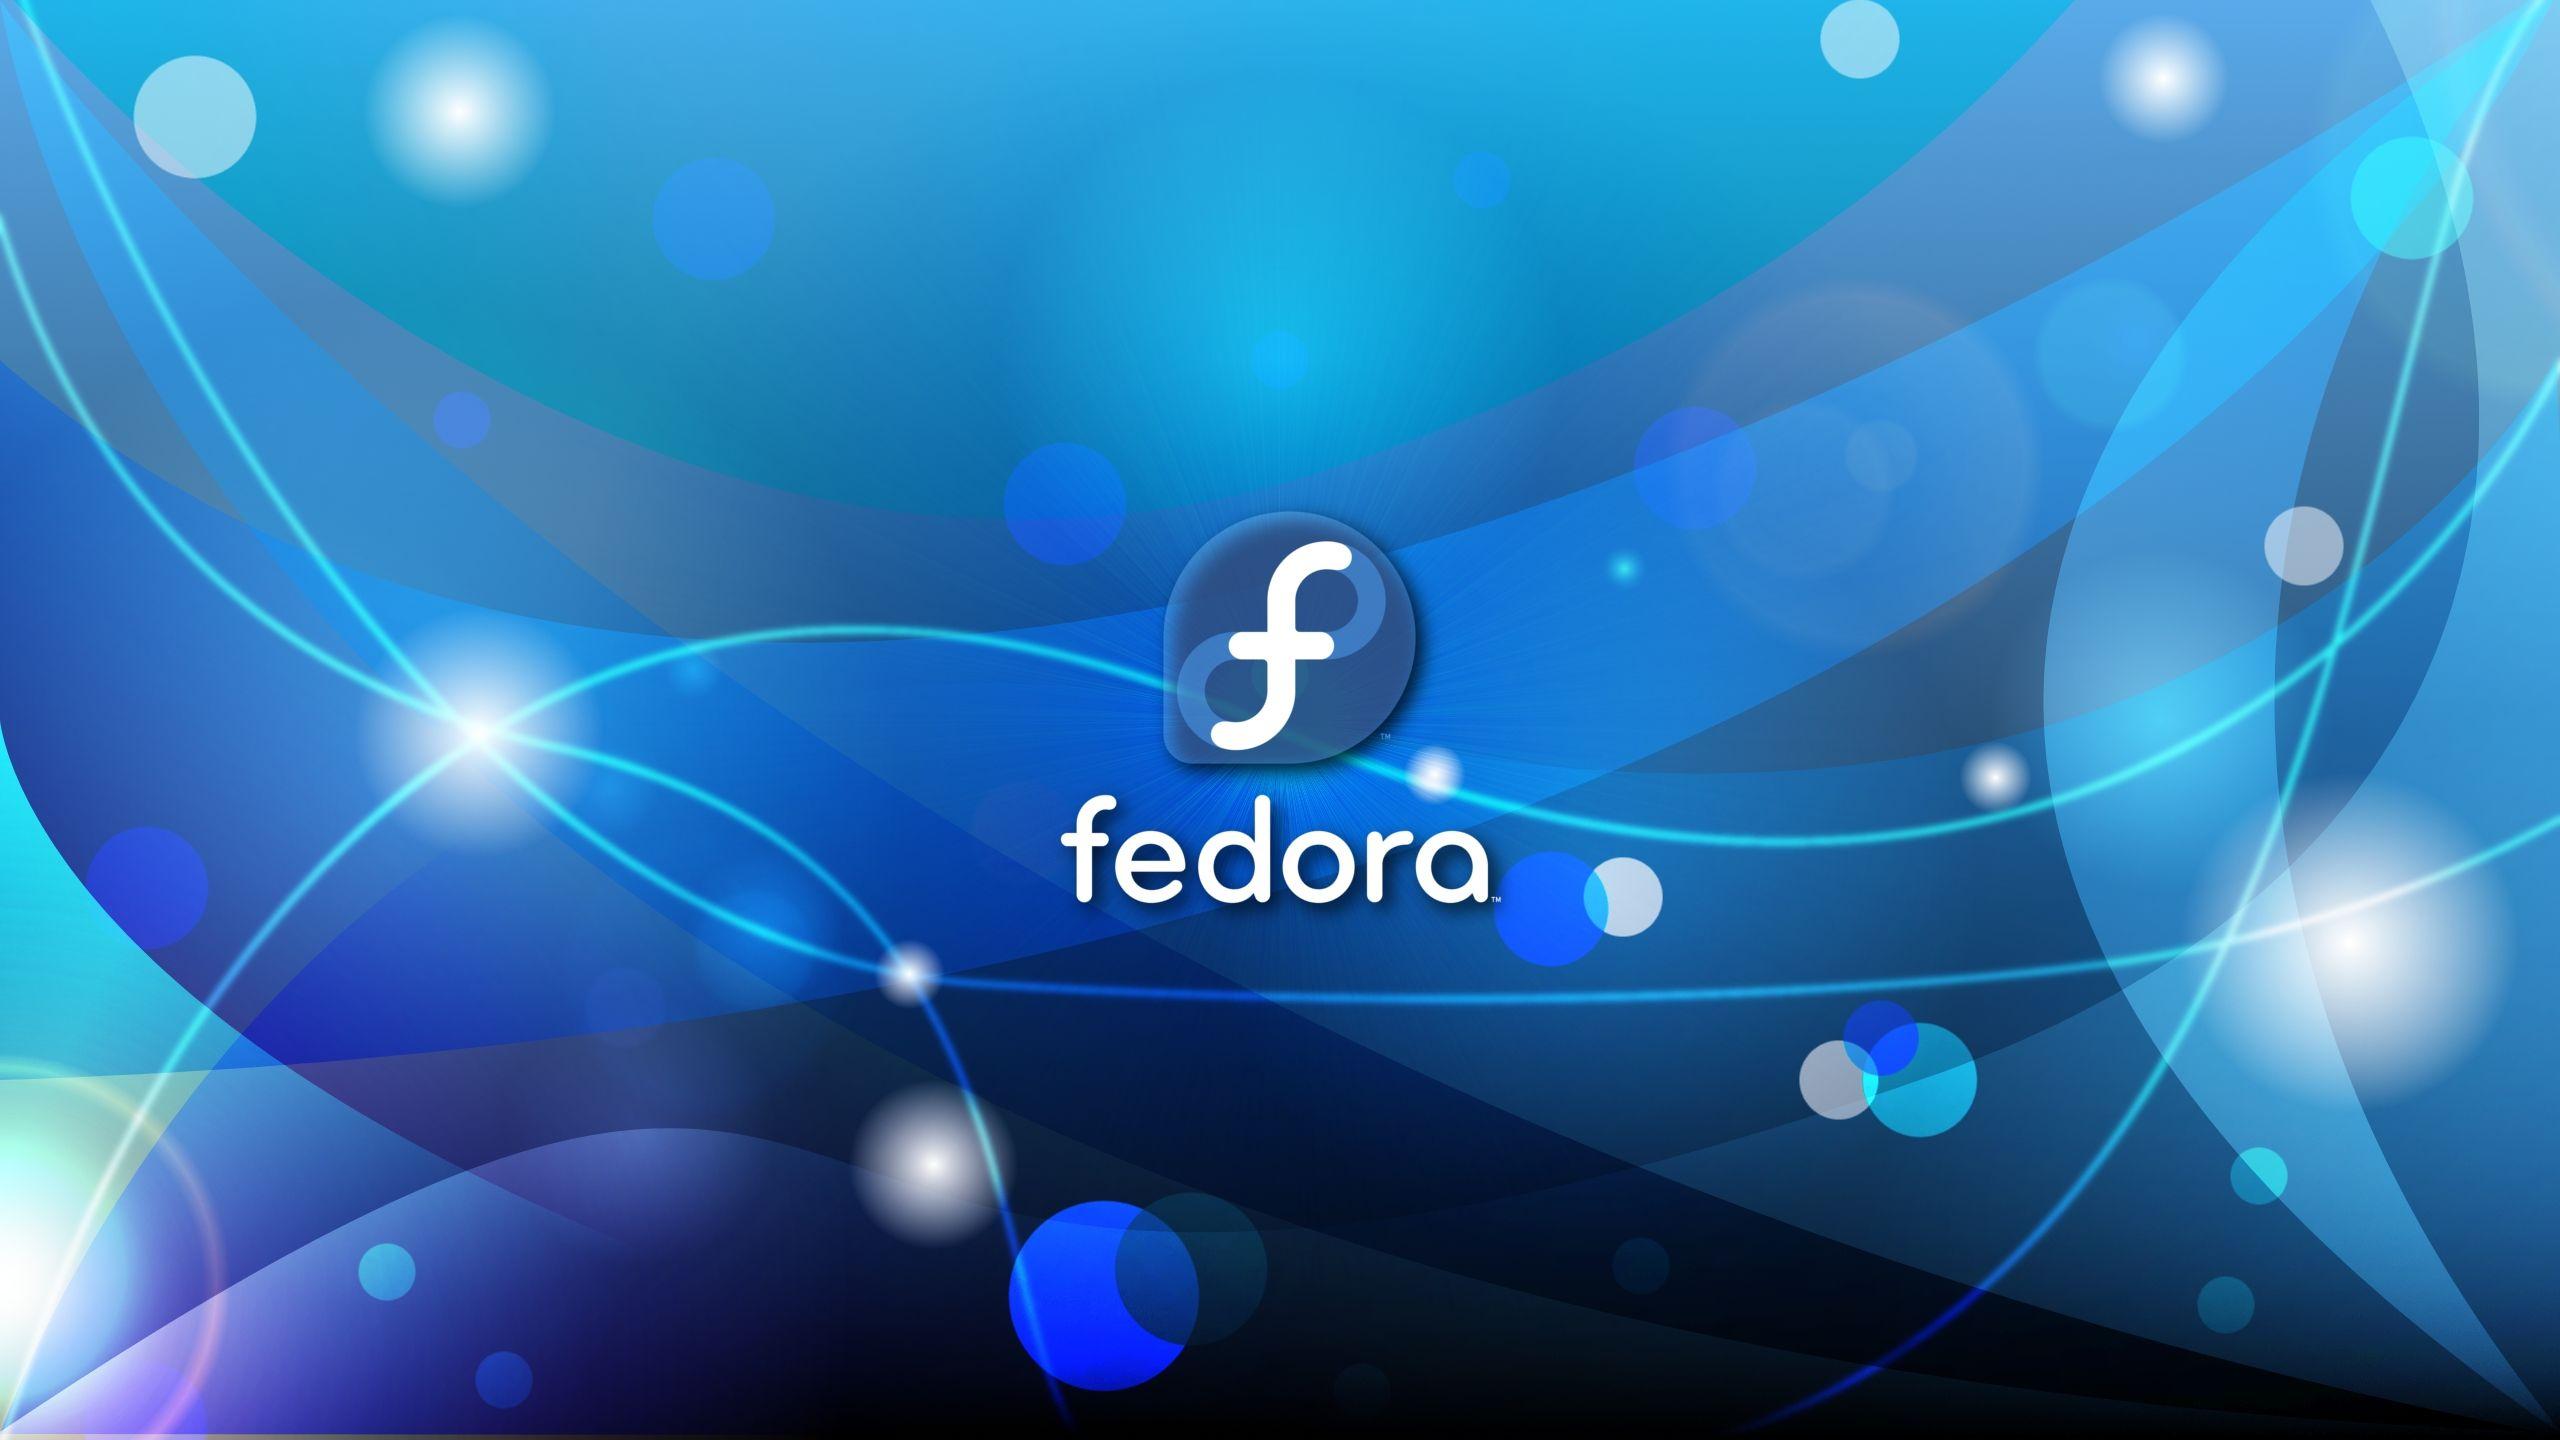 Fedora 29 background Ultra HD Desktop Background Wallpaper for  Widescreen   UltraWide Desktop  Laptop  Multi Display Dual  Triple Monitor   Tablet  Smartphone